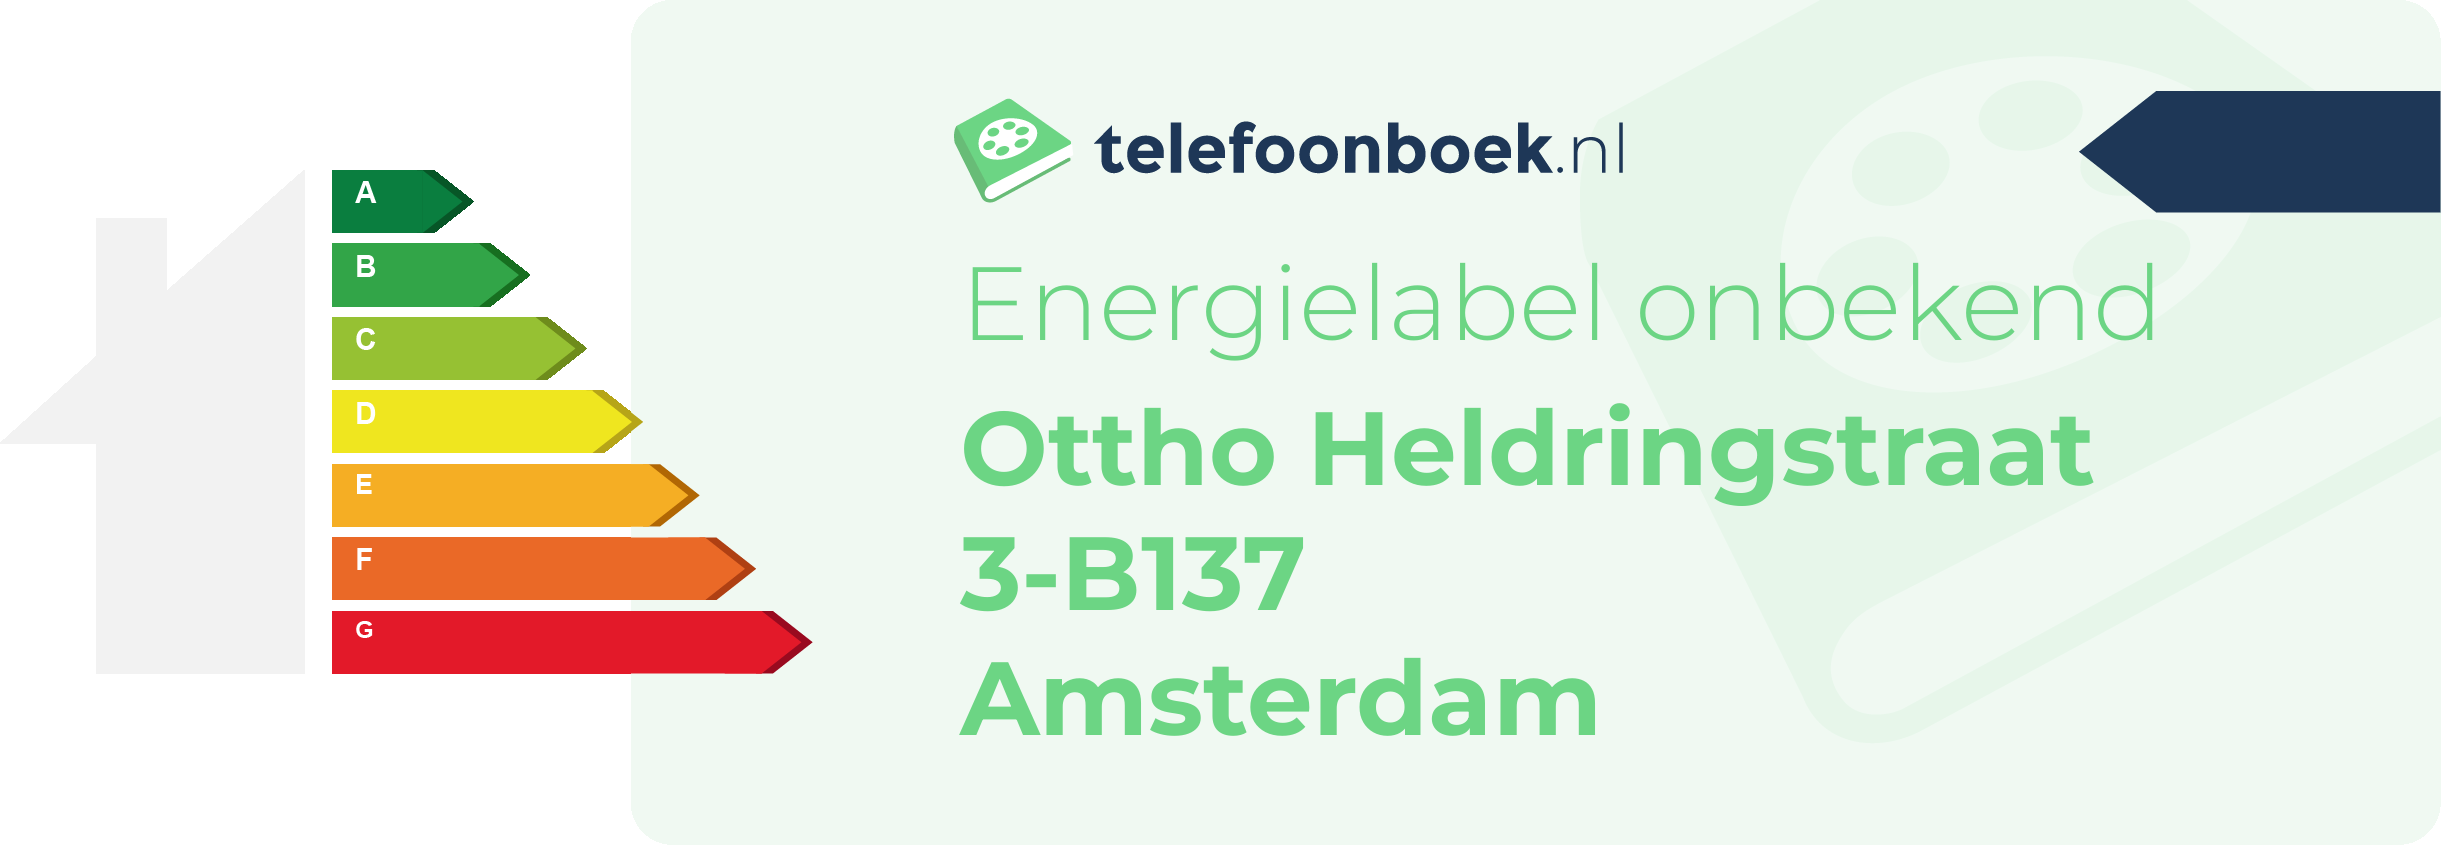 Energielabel Ottho Heldringstraat 3-B137 Amsterdam